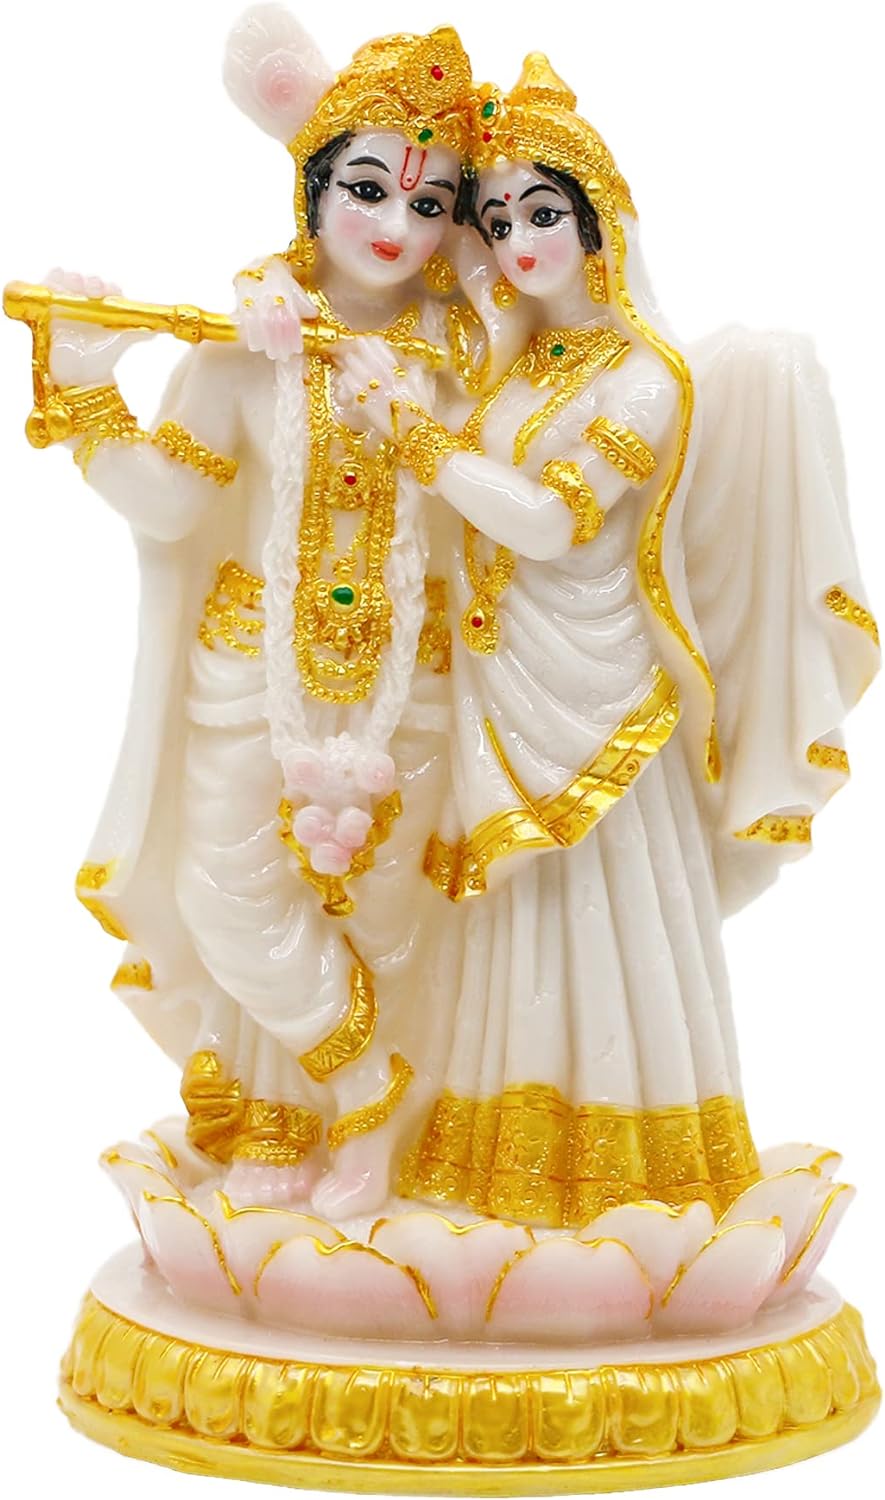 alikiki Hindu Radha Krishna Idols Statue- 5.7”H Marble Look Indian God Krishna Radha Sculpture for Diwali Puja Wedding Gift Home Office Mandir Temple Altar Shrine Decor